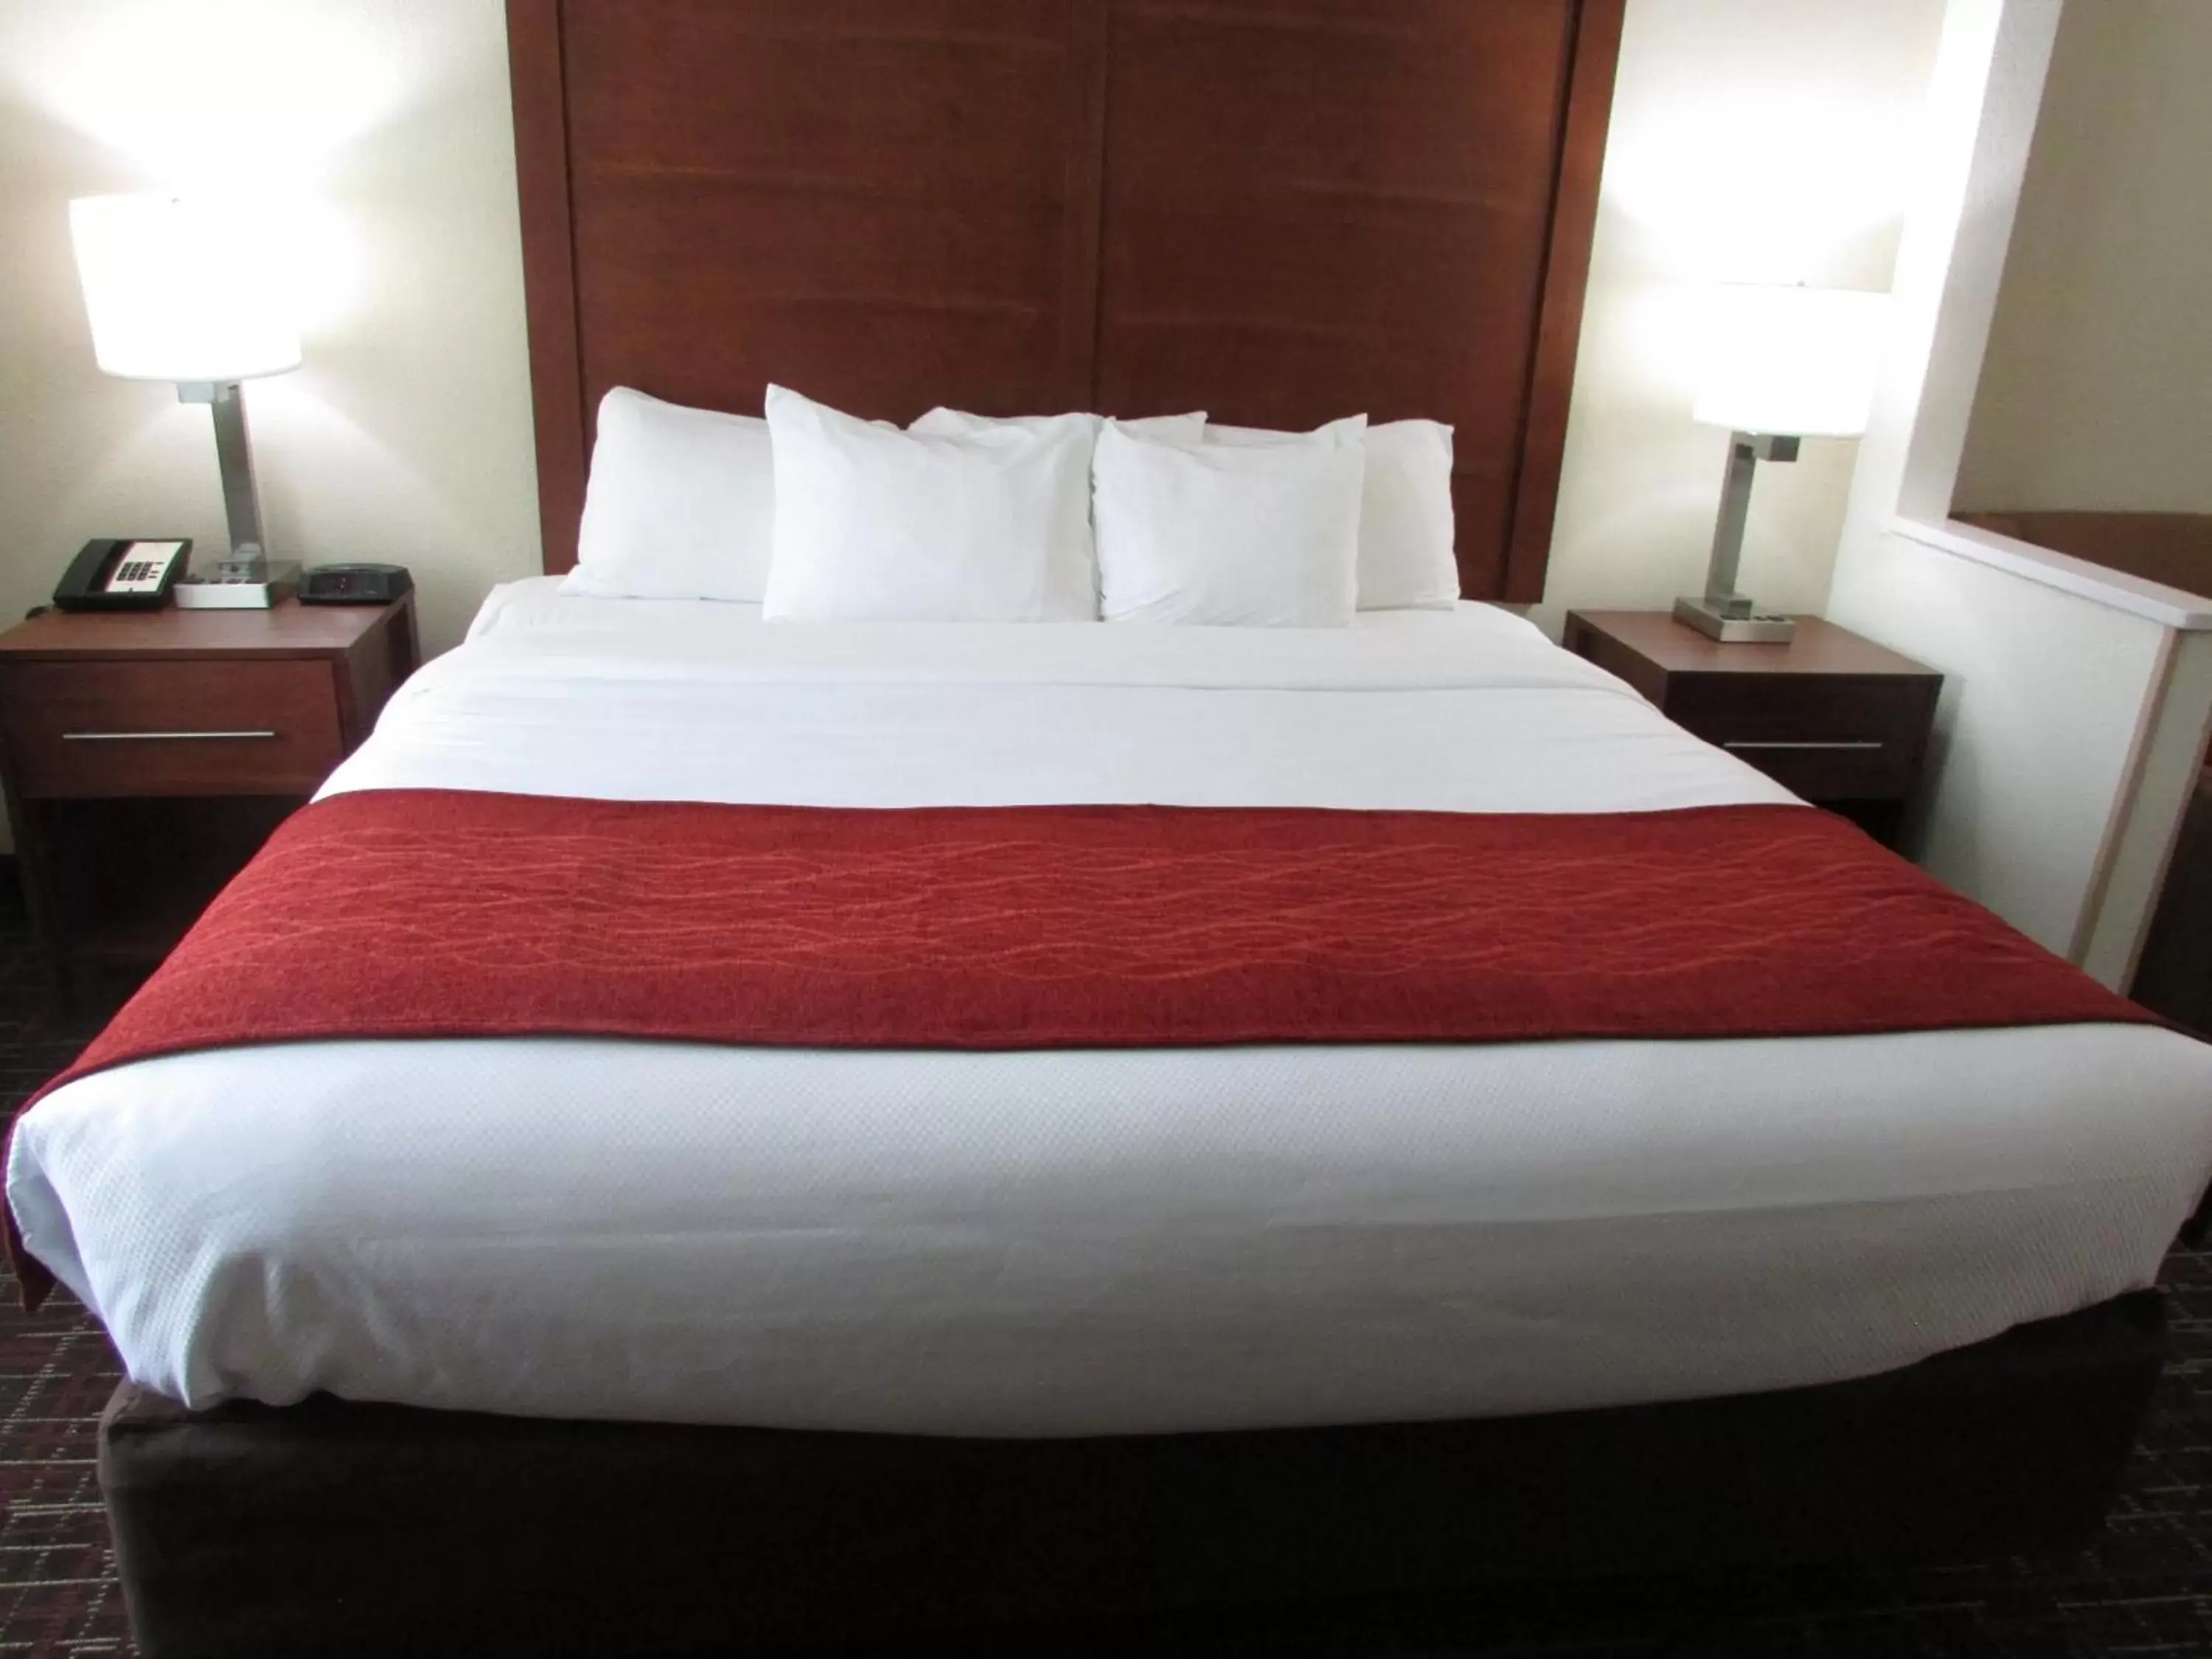 Bed in Comfort Inn Wichita Falls near University